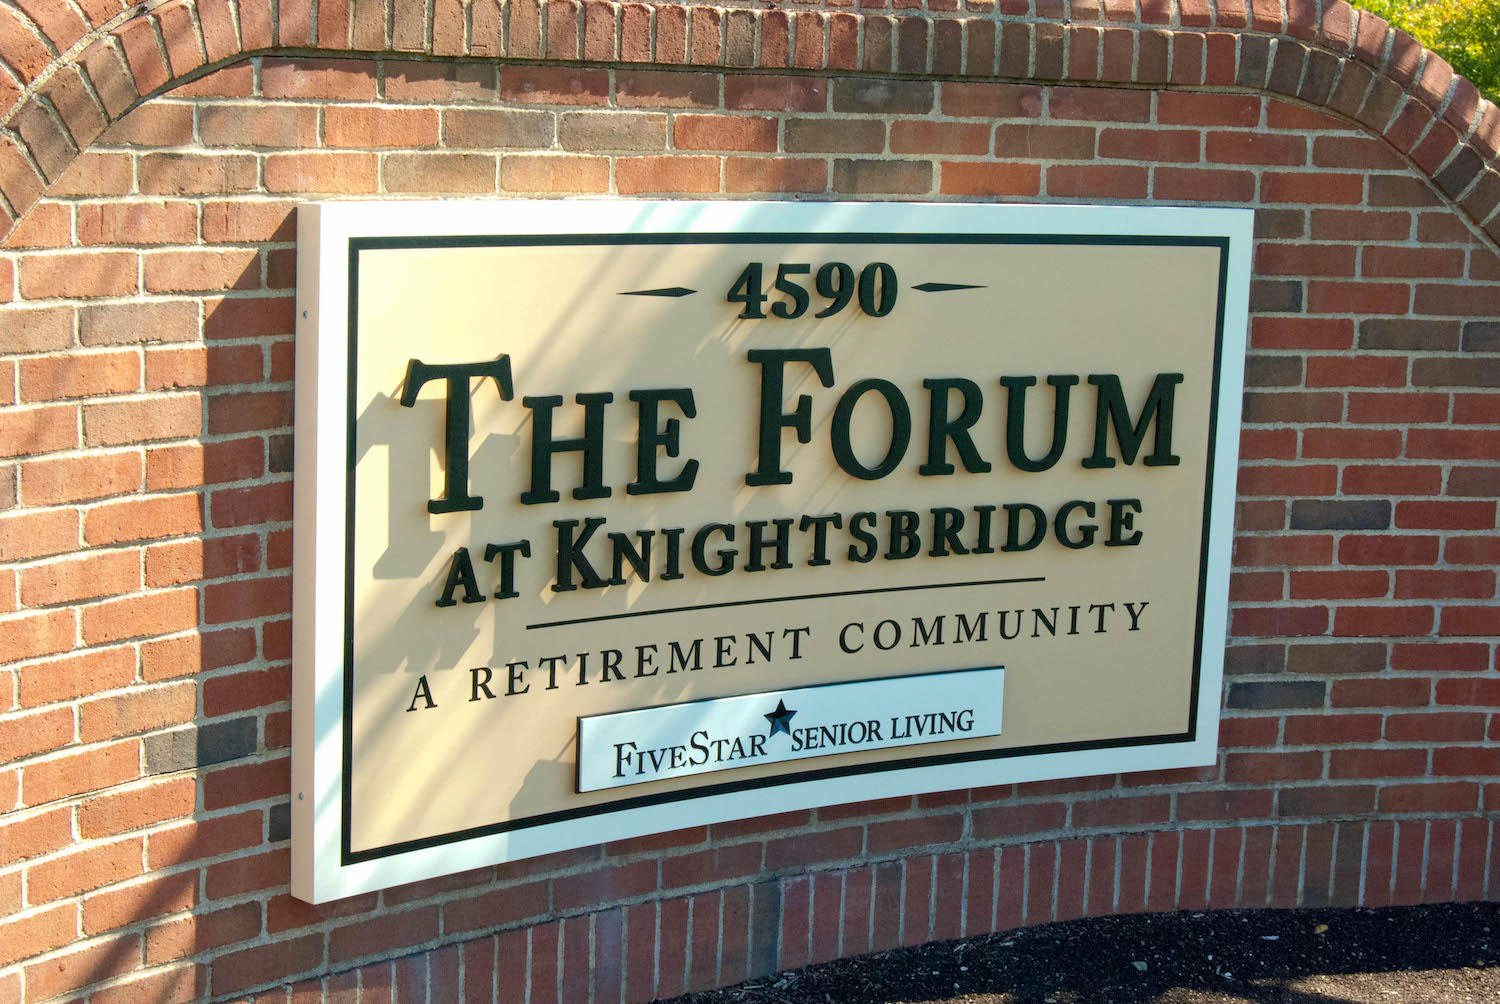 The Forum at Knightsbridge sign